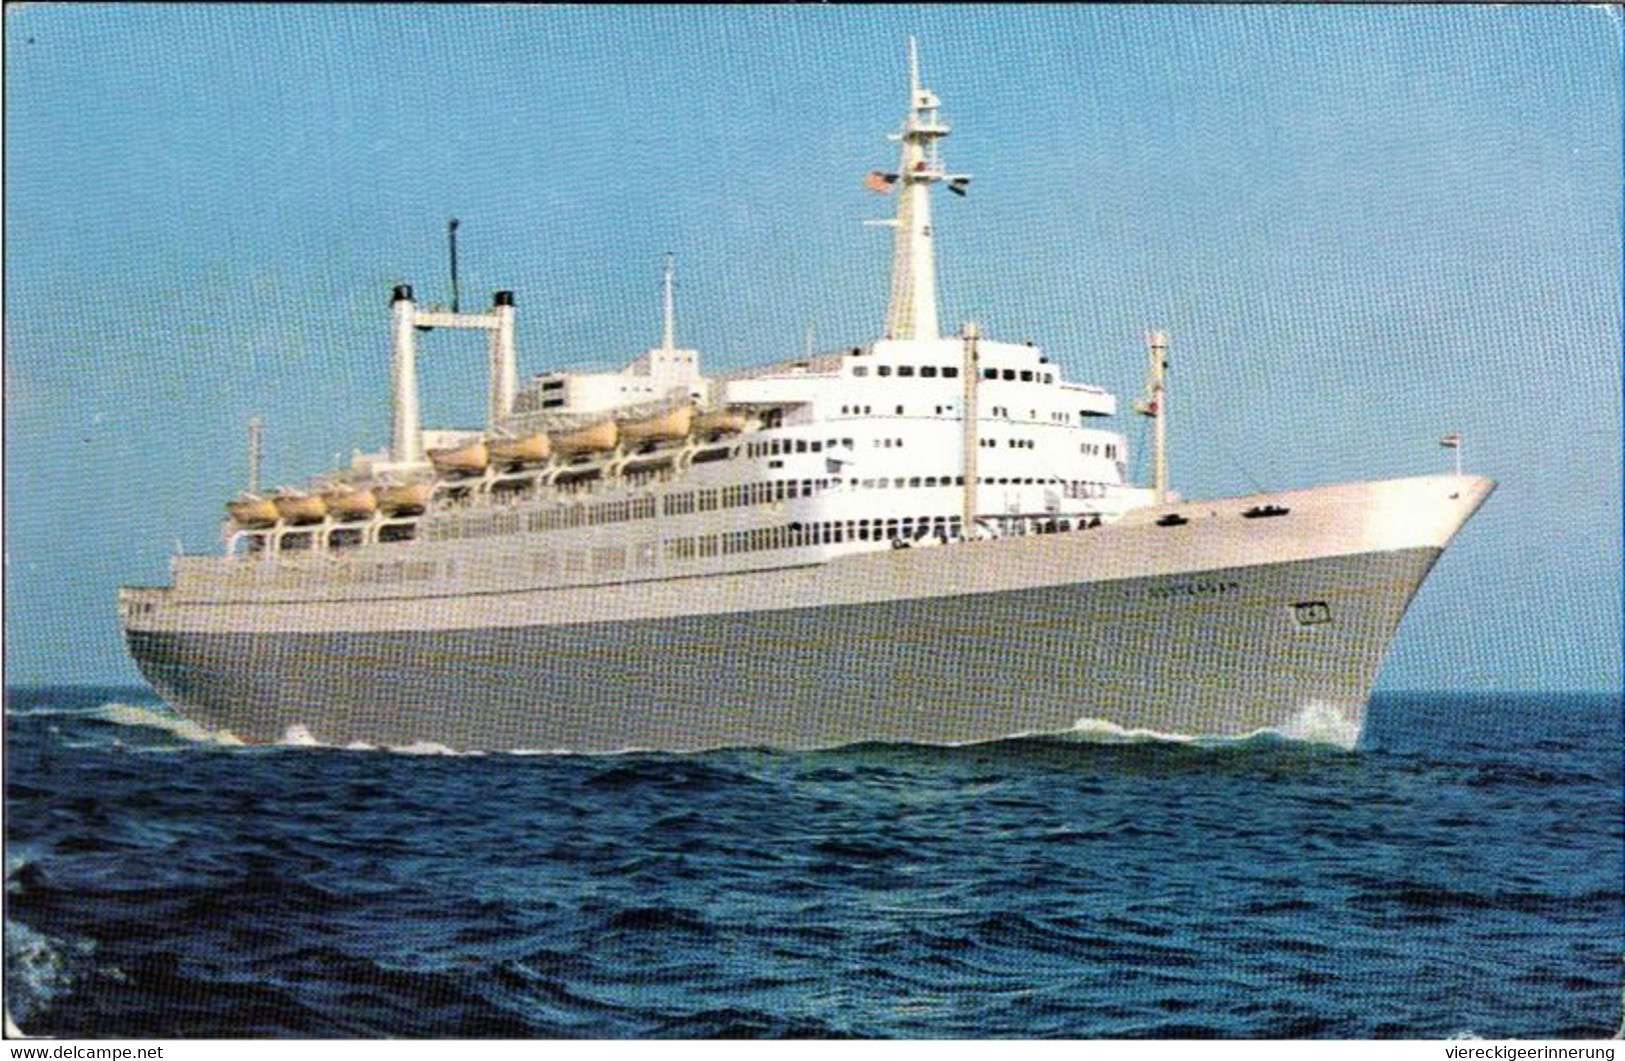 !  1965 Postcard Holland America Line, Flagship Rotterdam, Transatlantic Cruise Ship, Schiff - Steamers